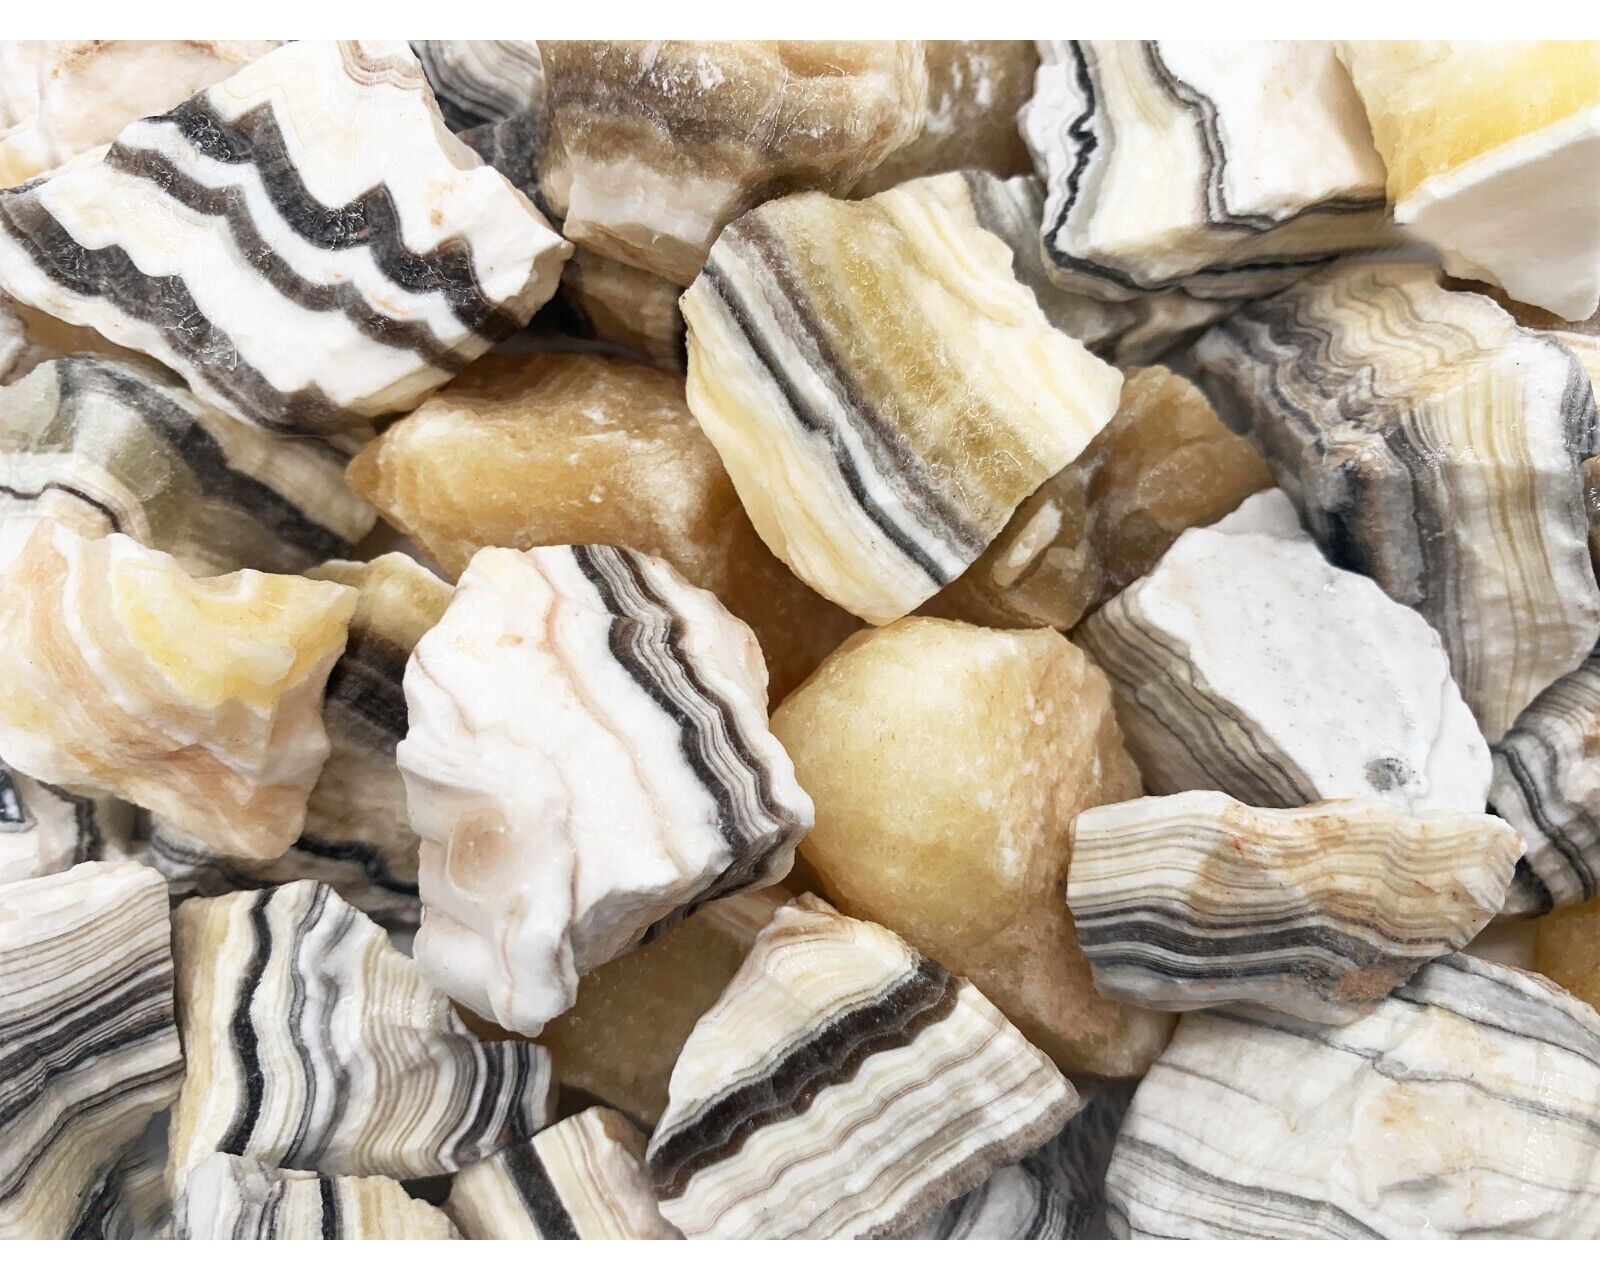 1 lb Raw Zebra Calcite Rough Stones from Mexico – 1” to 2.5” Average